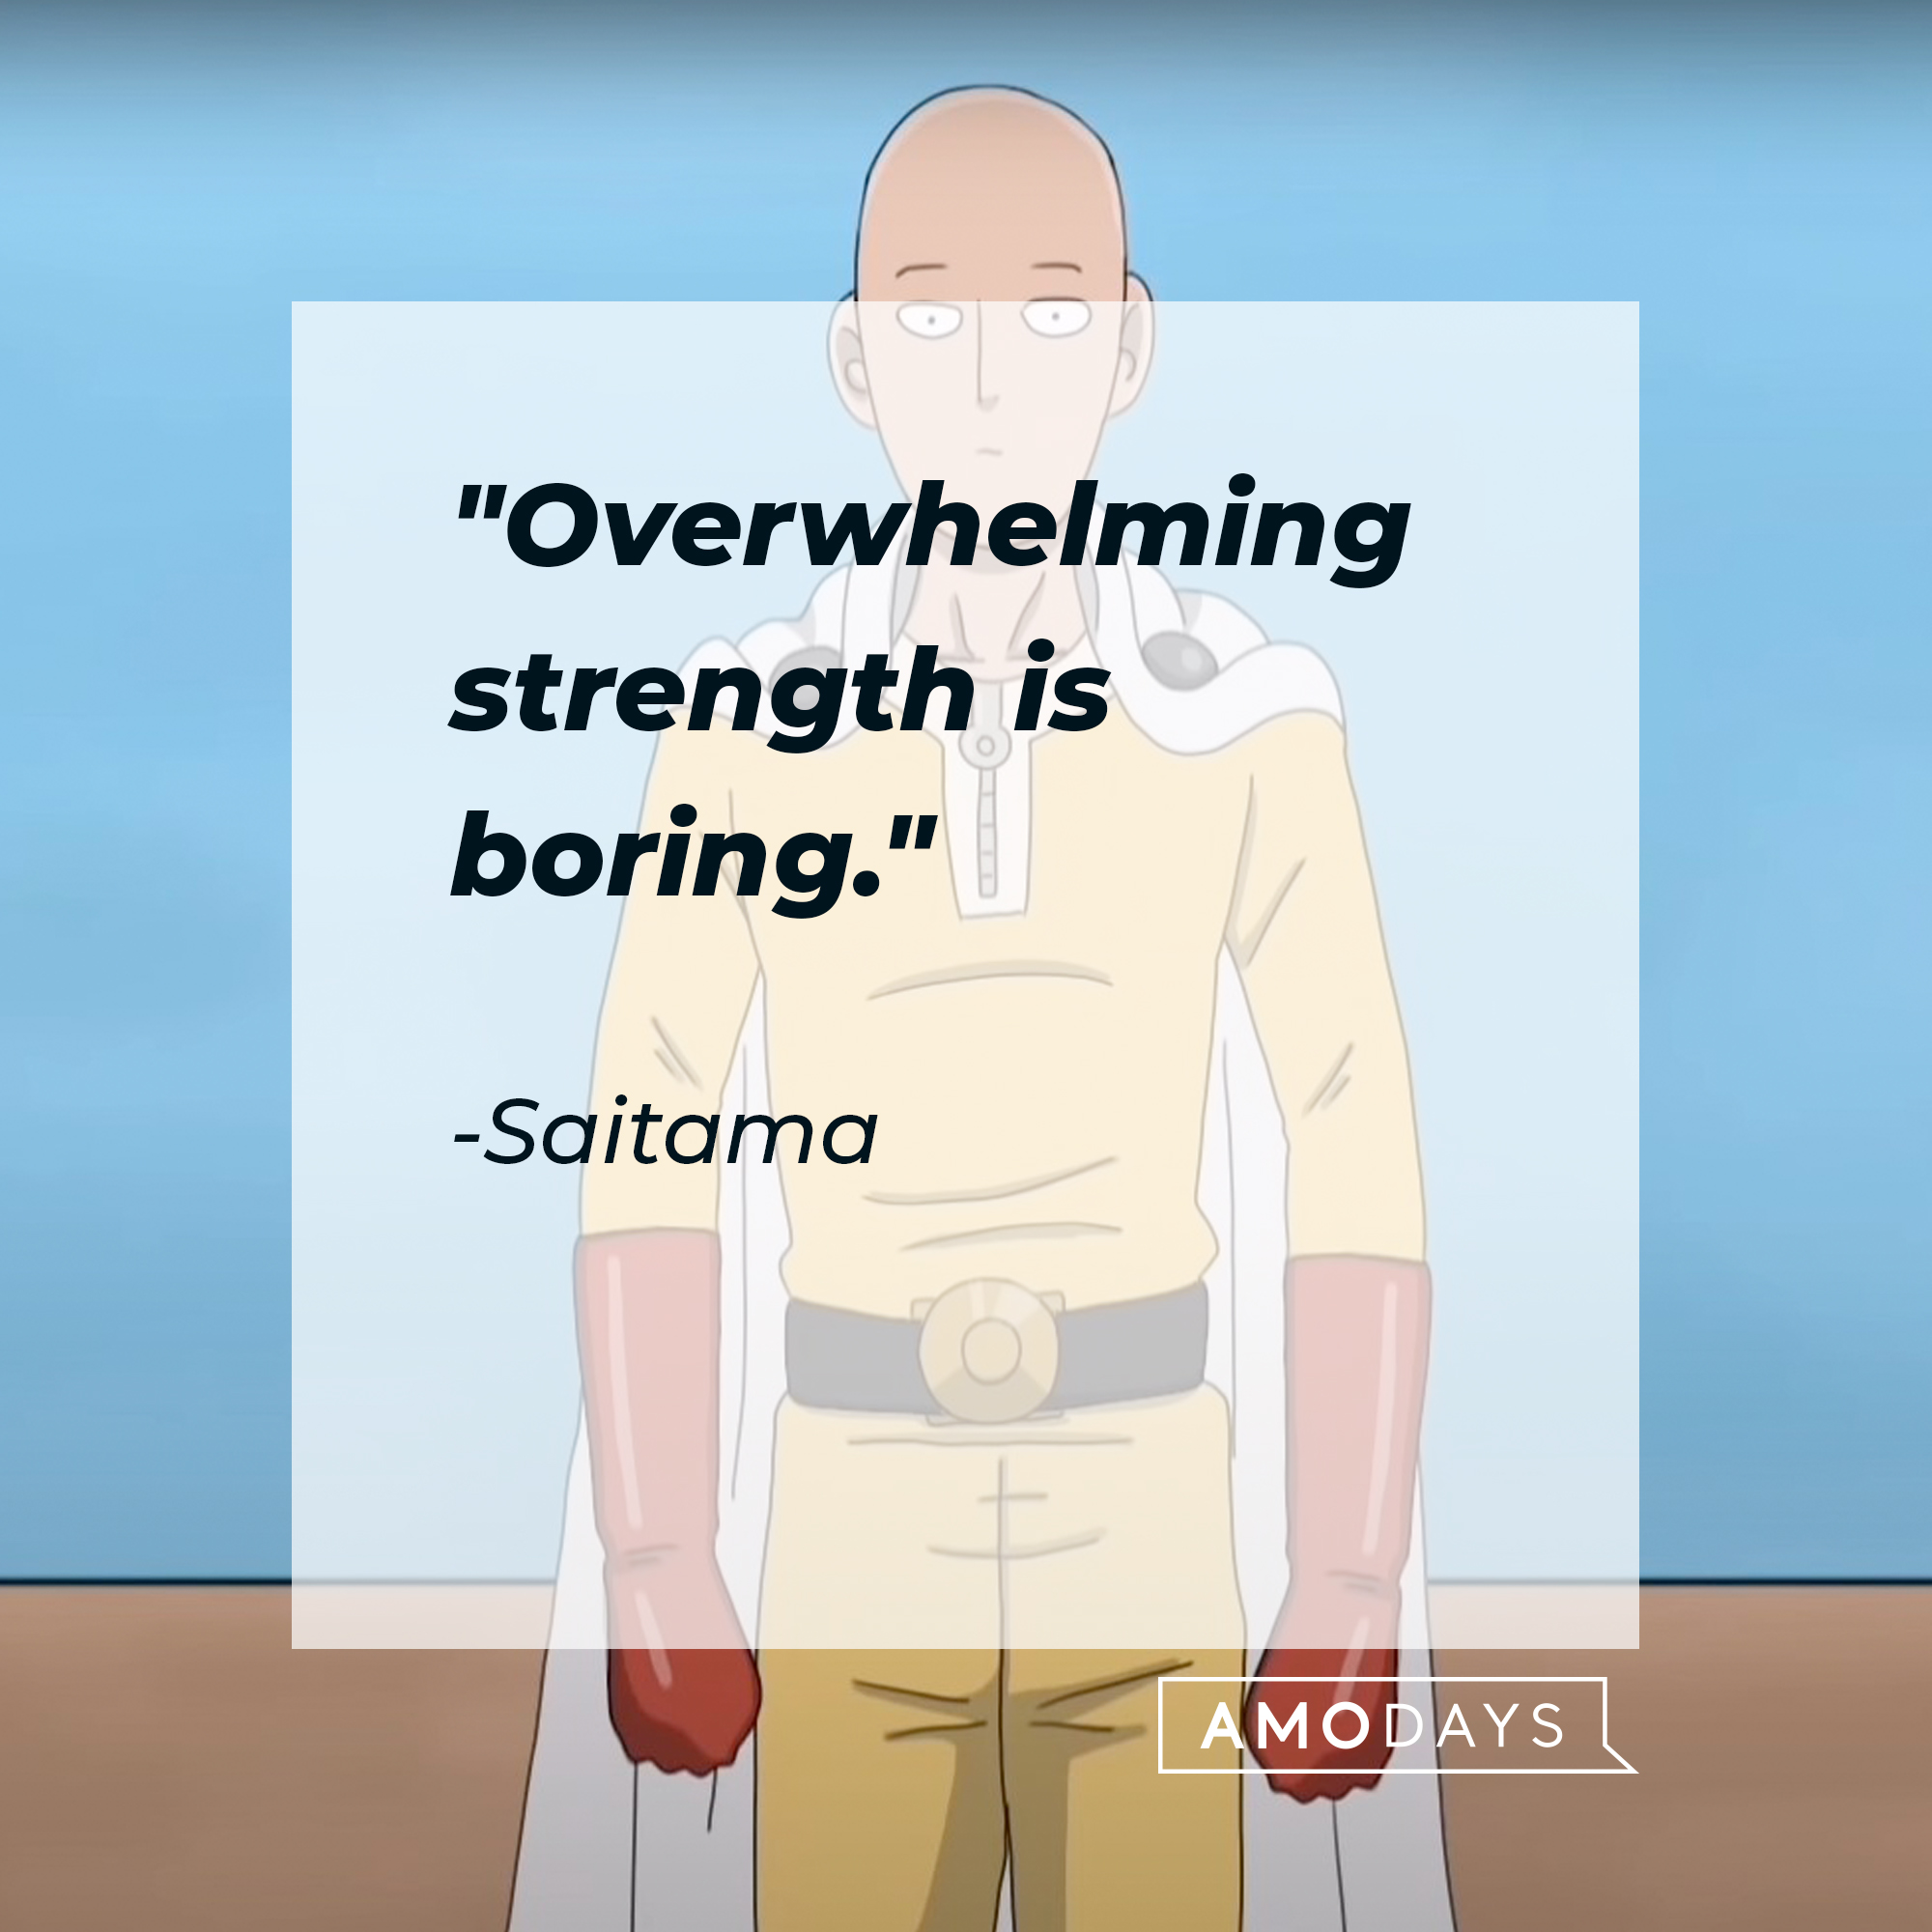 Saitama's quote: "Overwhelming strength is boring." | Source: Facebook.com/OnePunchManMobileSEAEN